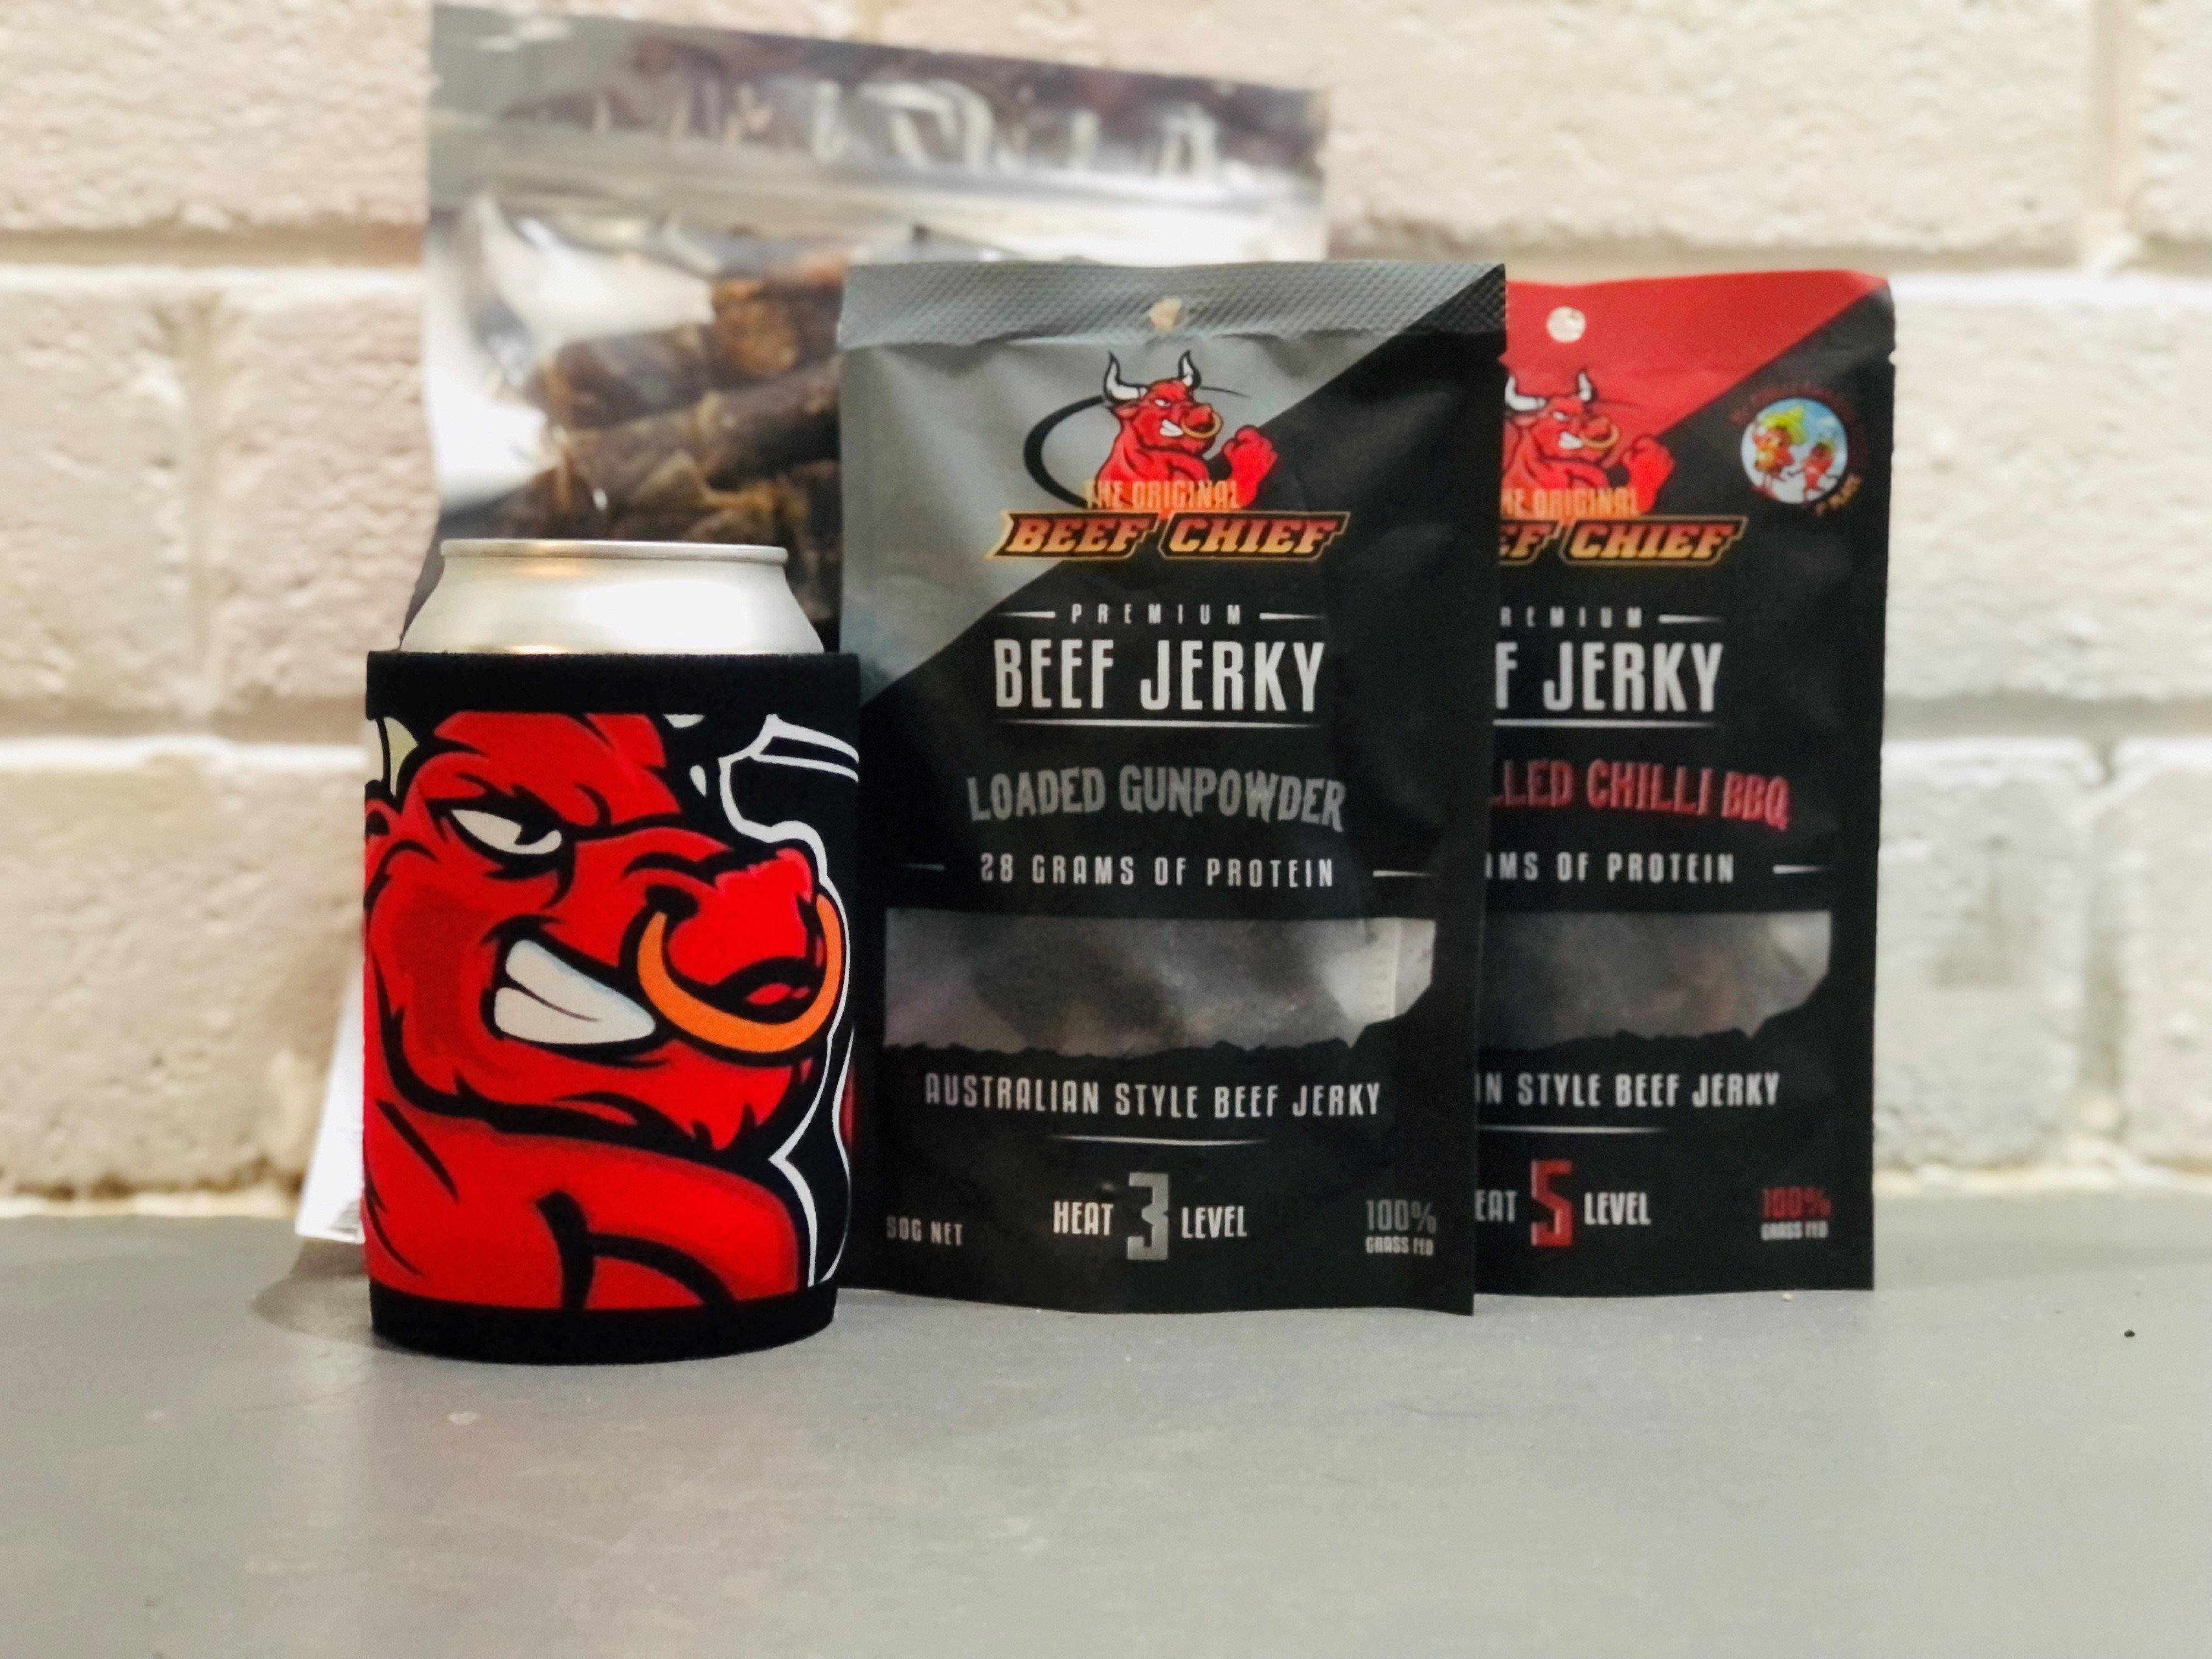 SMOKEY CHILLI SNACK PACK beef jerky - Original Beef Chief